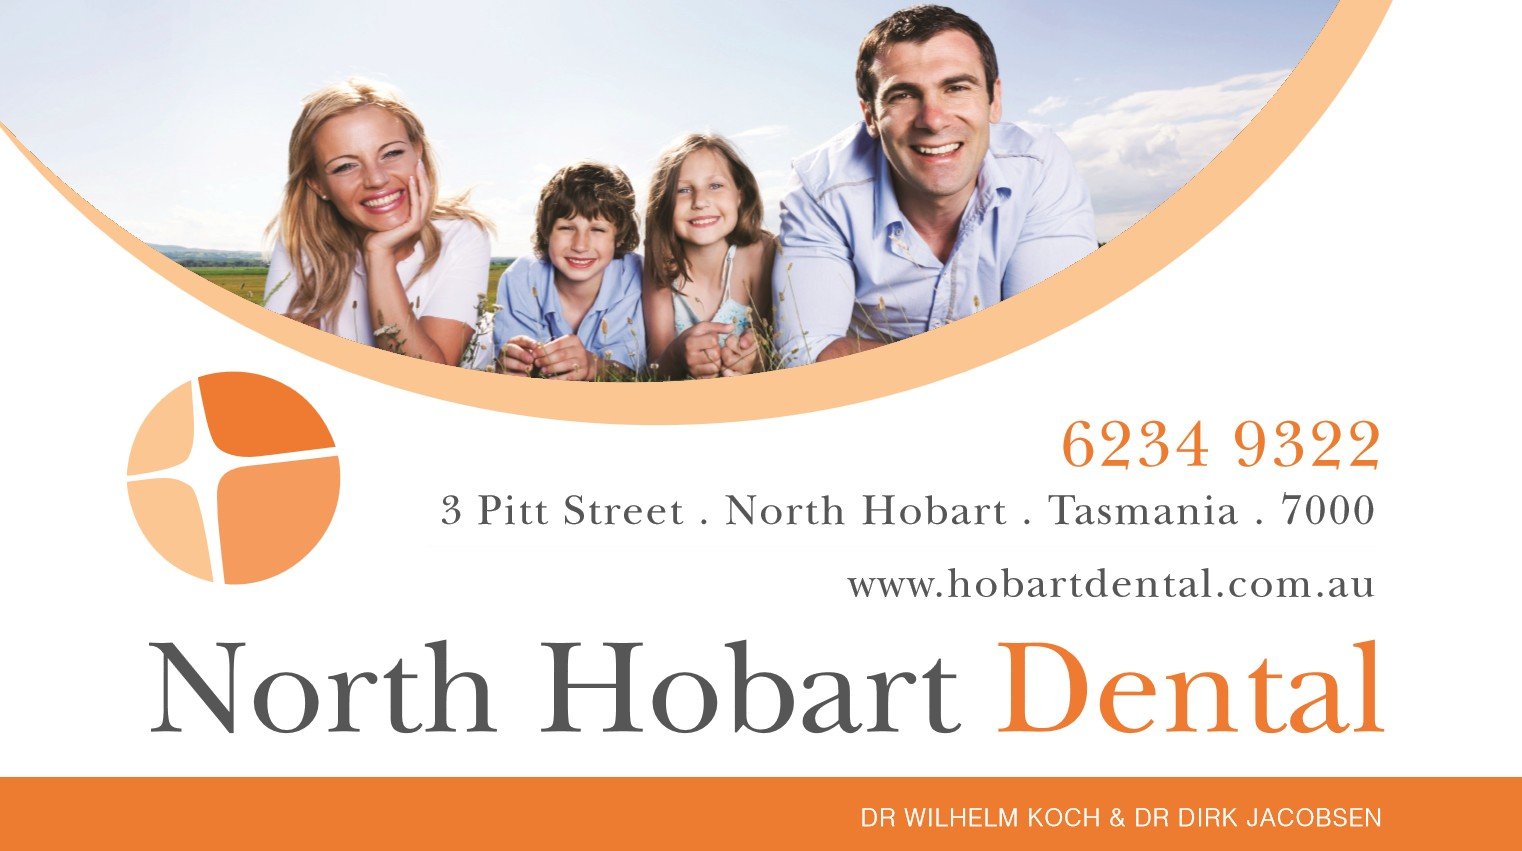 North Hobart Dental - Cairns Dentist